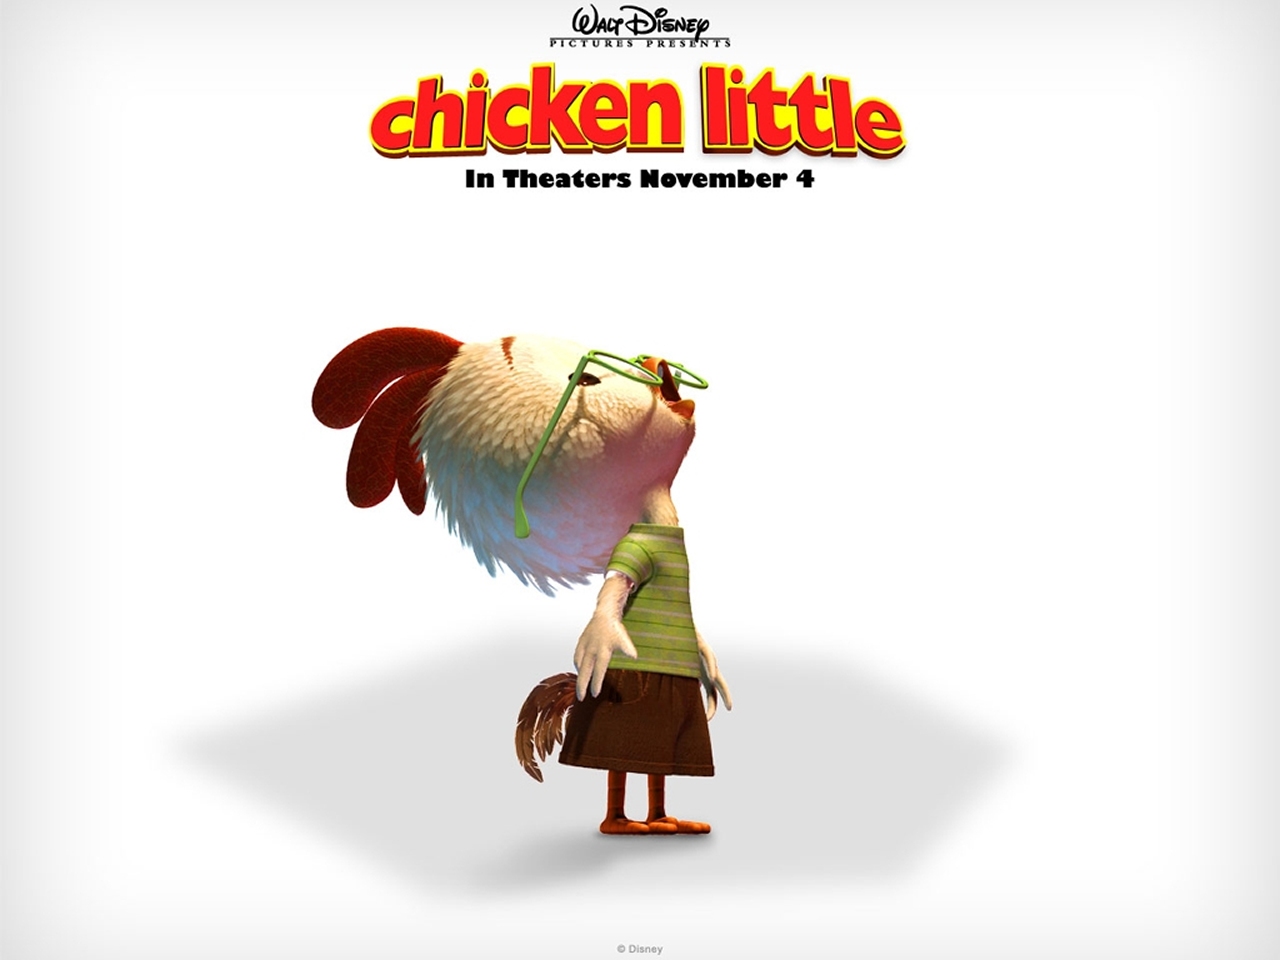 "Chicken Little" desktop wallpaper (1280 x 960 pixels)